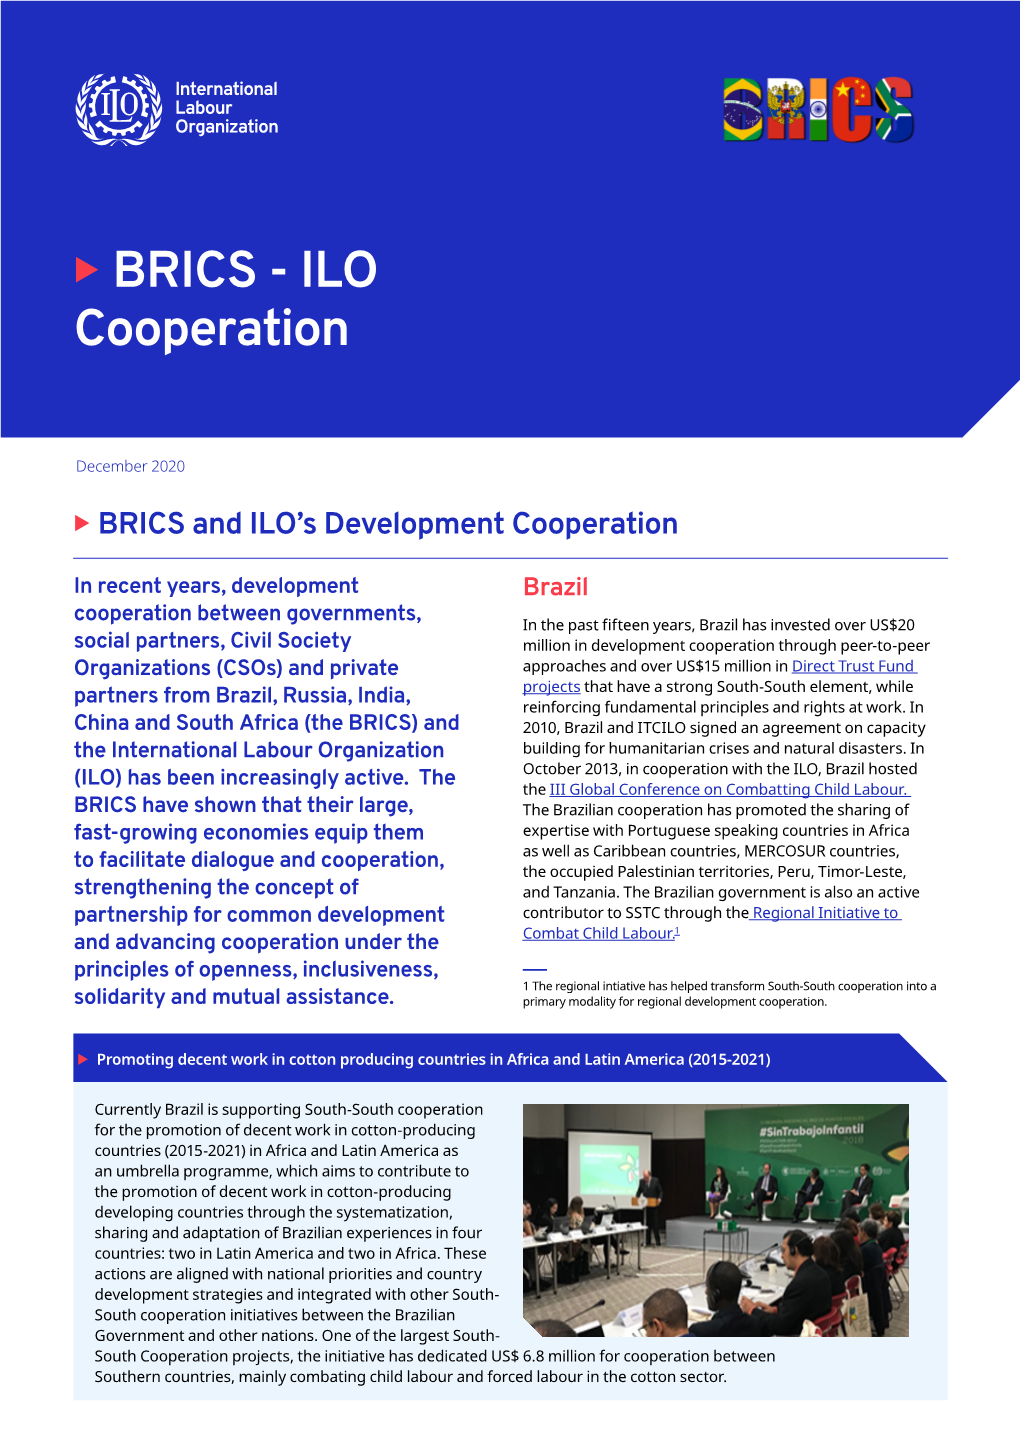 BRICS - ILO Cooperation